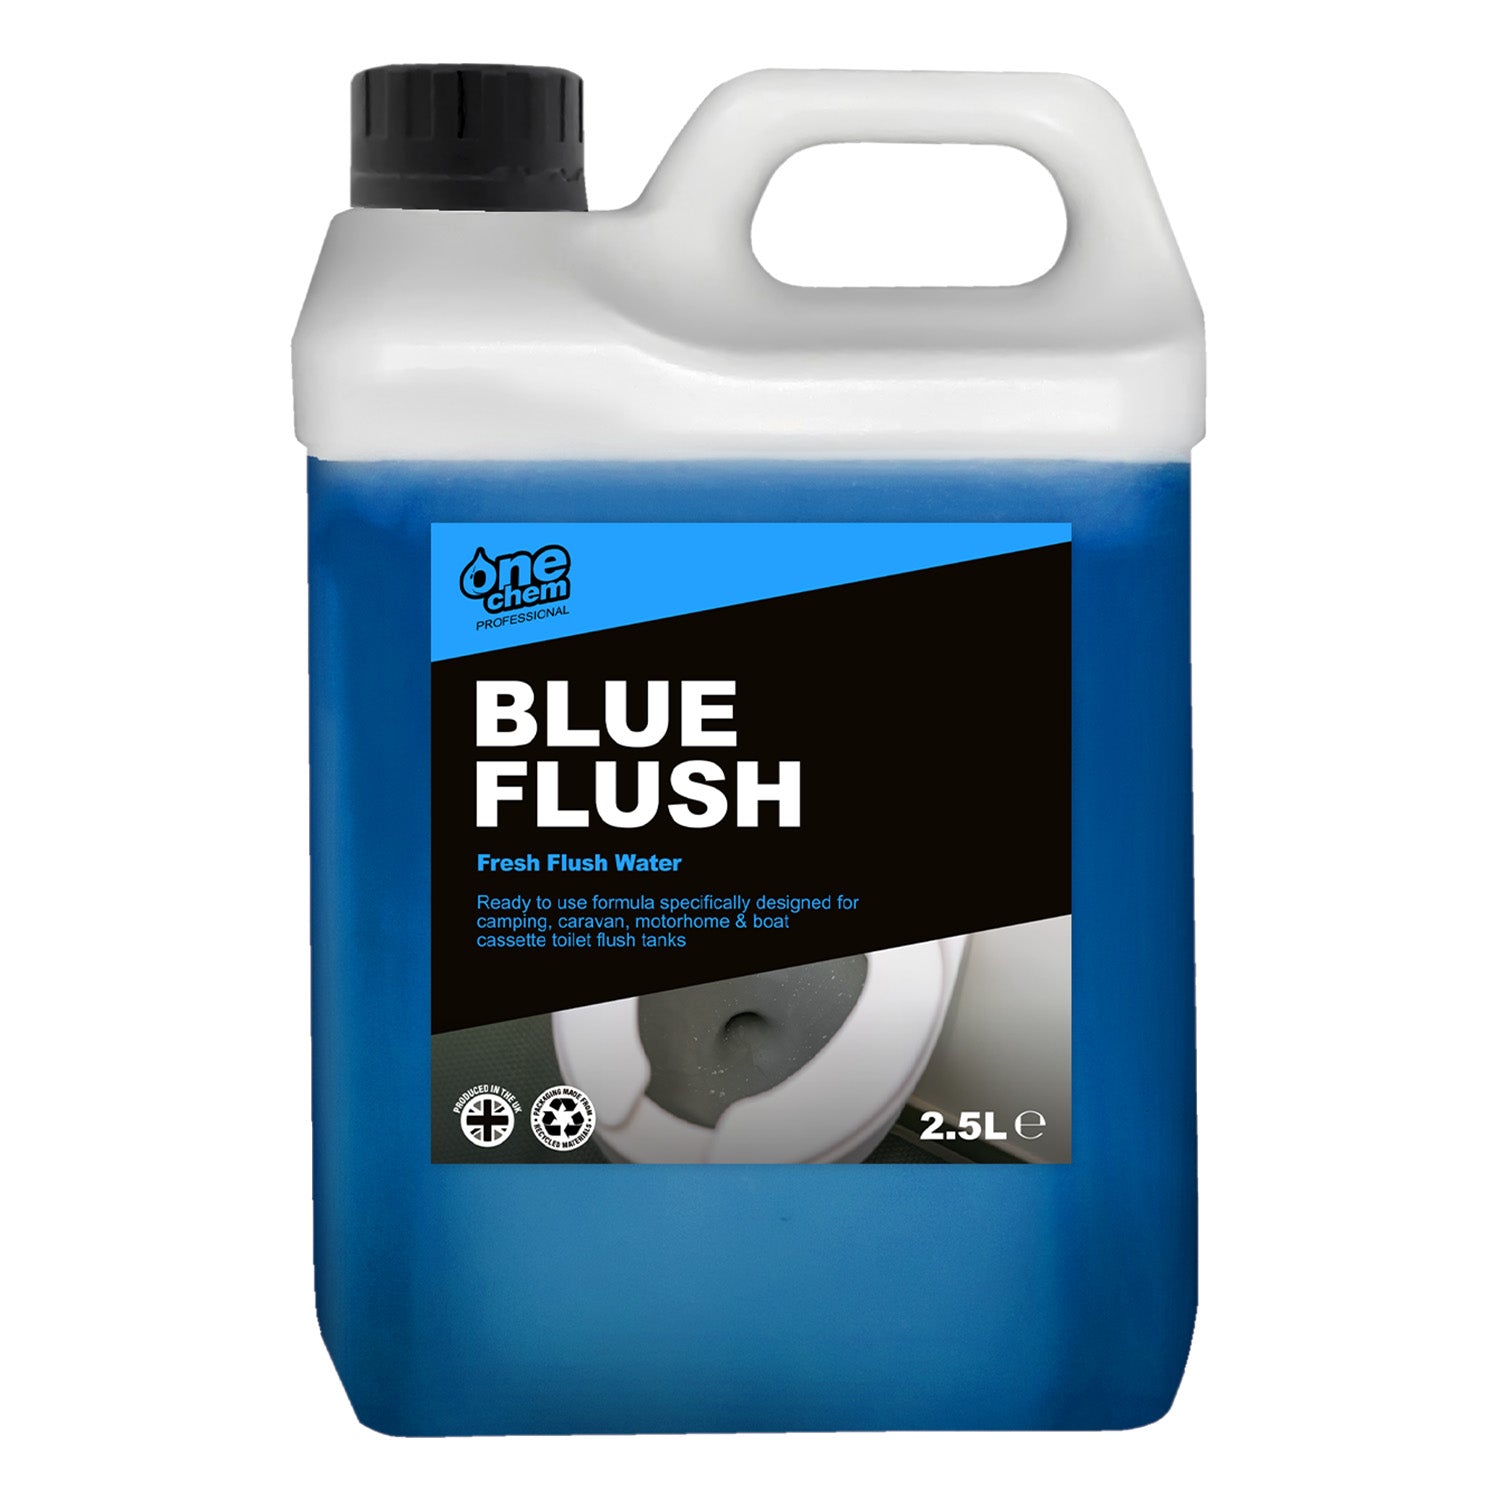 One Chem Professional Toilet Cleaner Blue Flush Fluid, 2.5 Litre